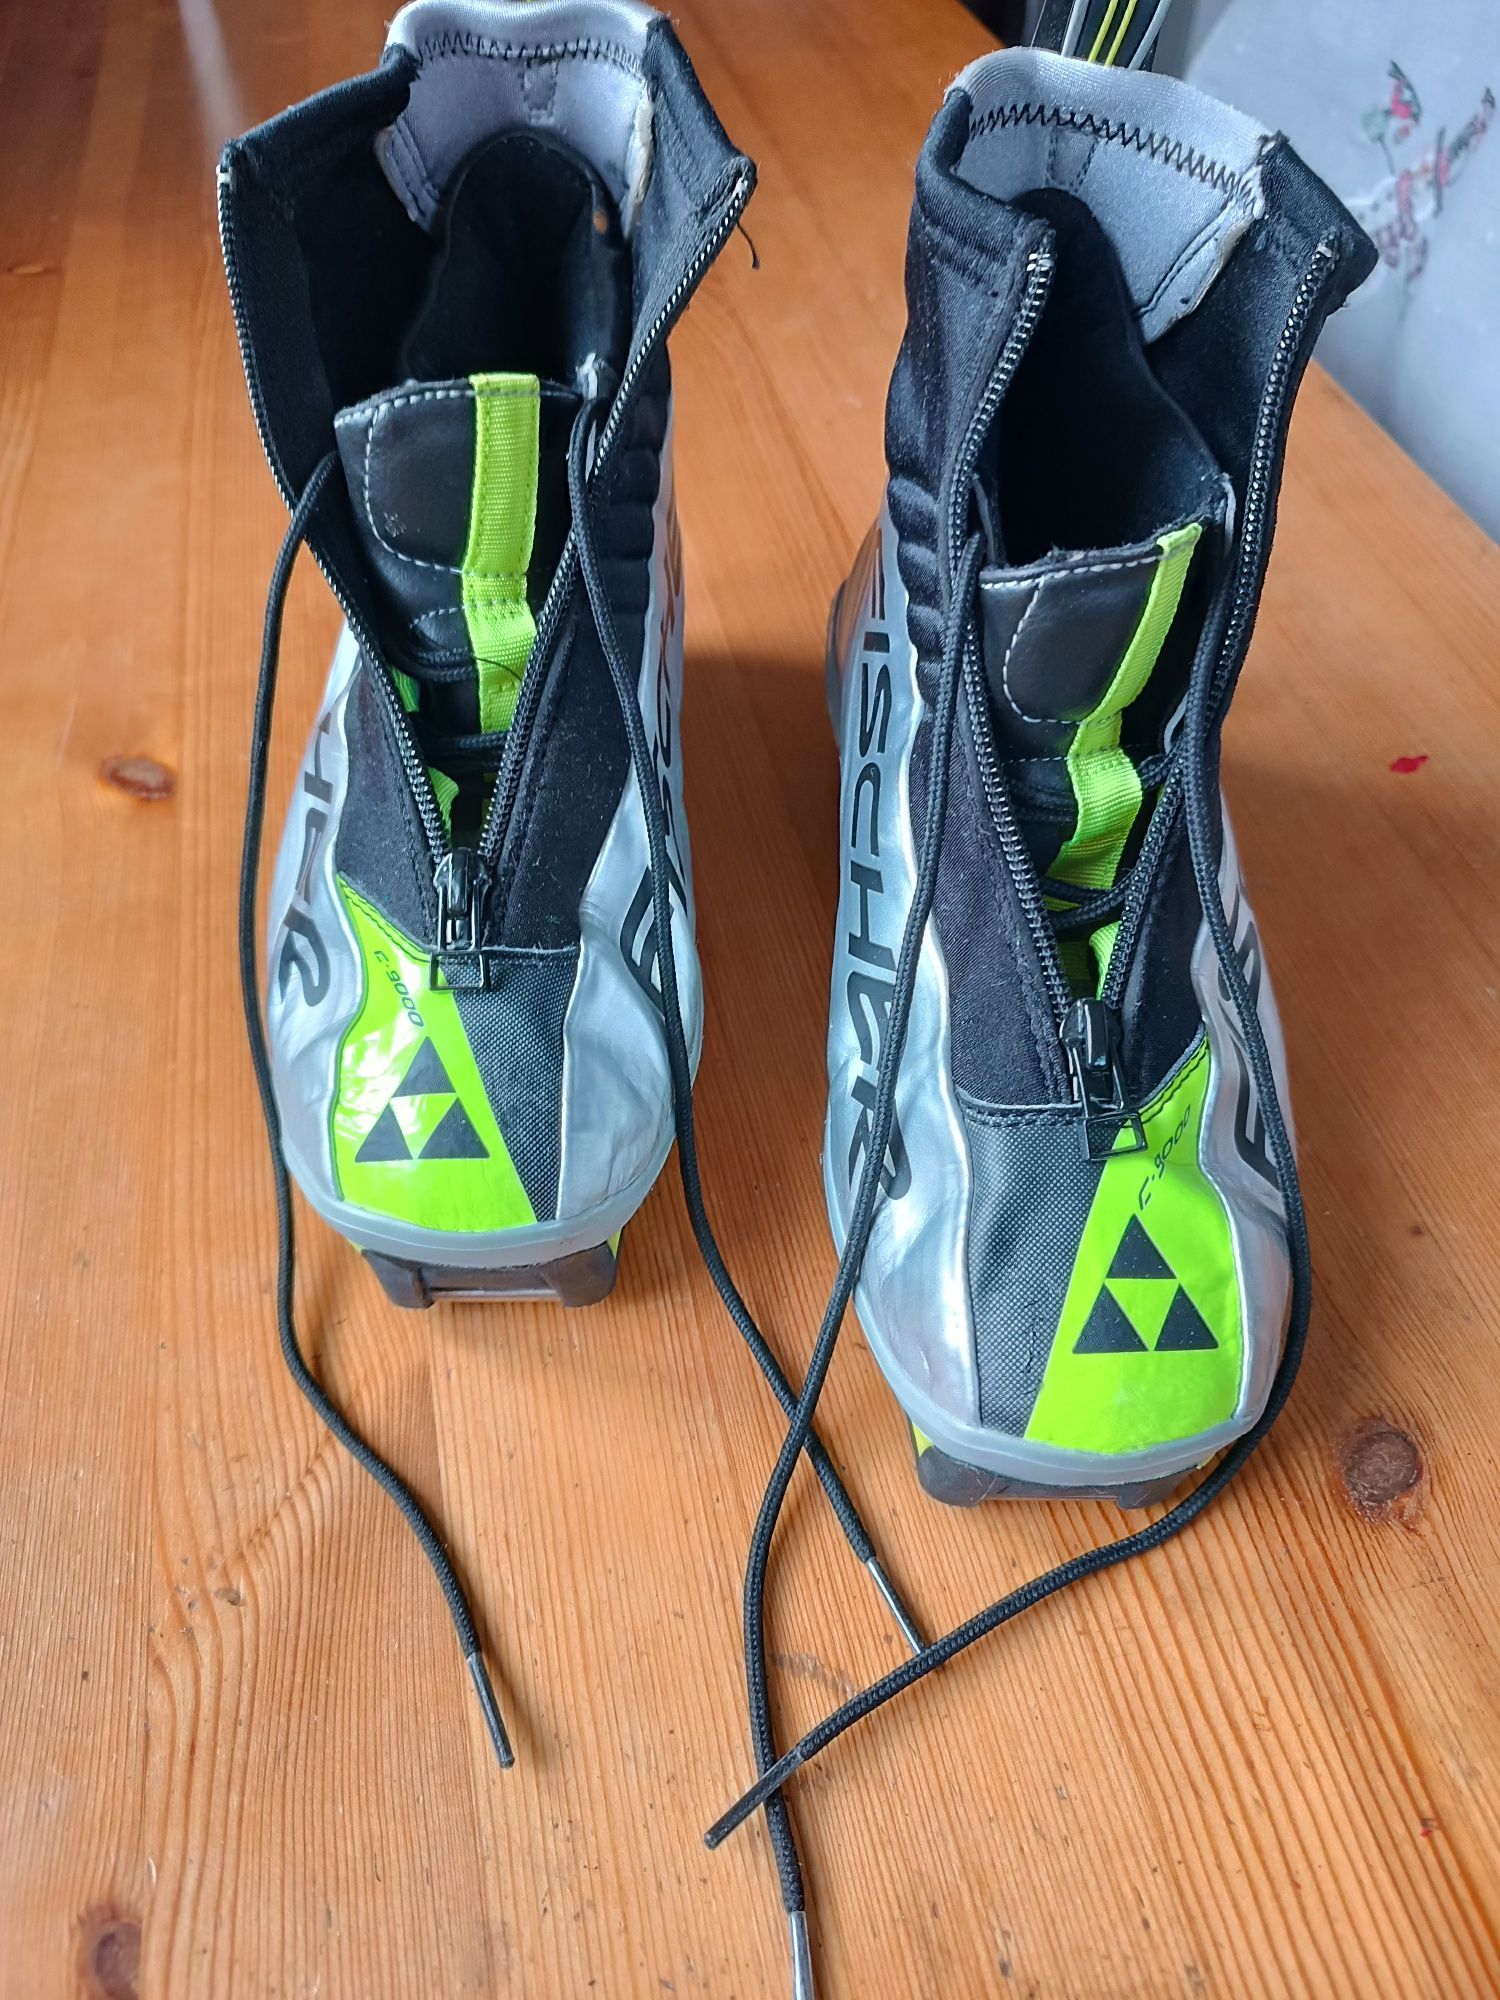 Buty narciarskie biegowe FISCHER r.36